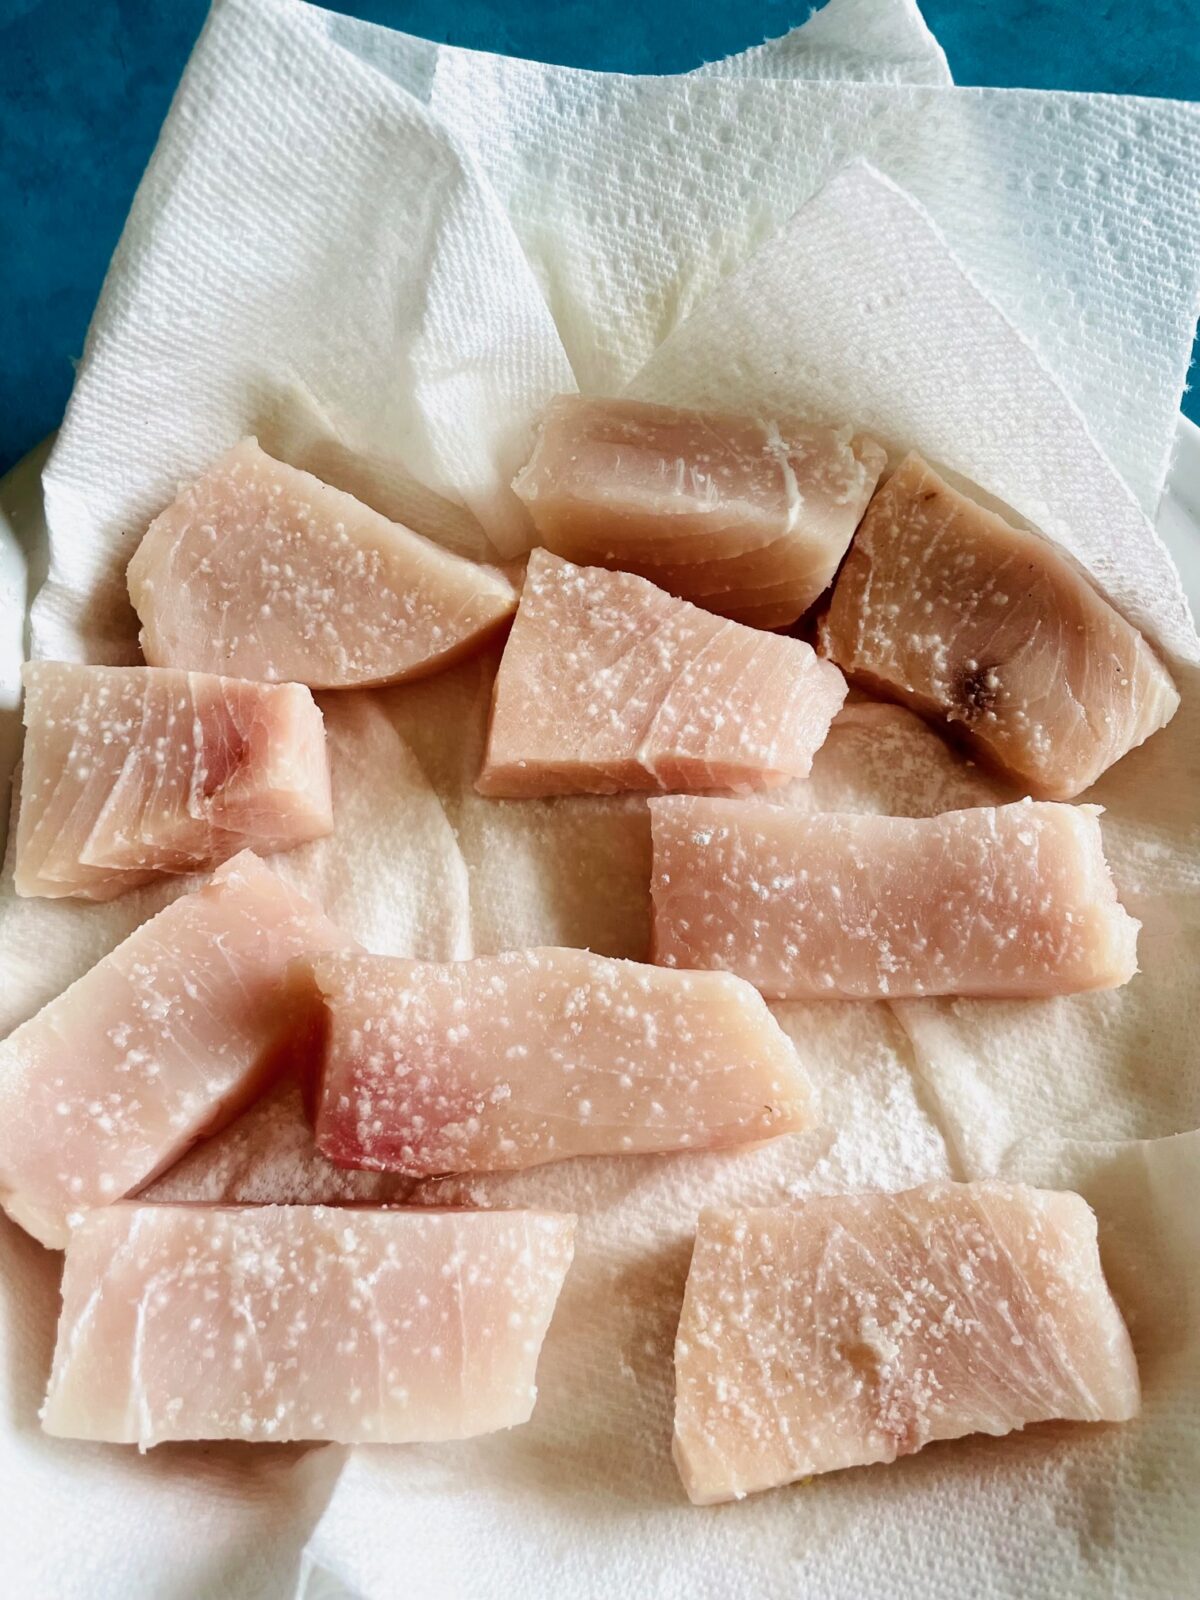 Swordfish pieces for vindaye sprinkled with cornstarch